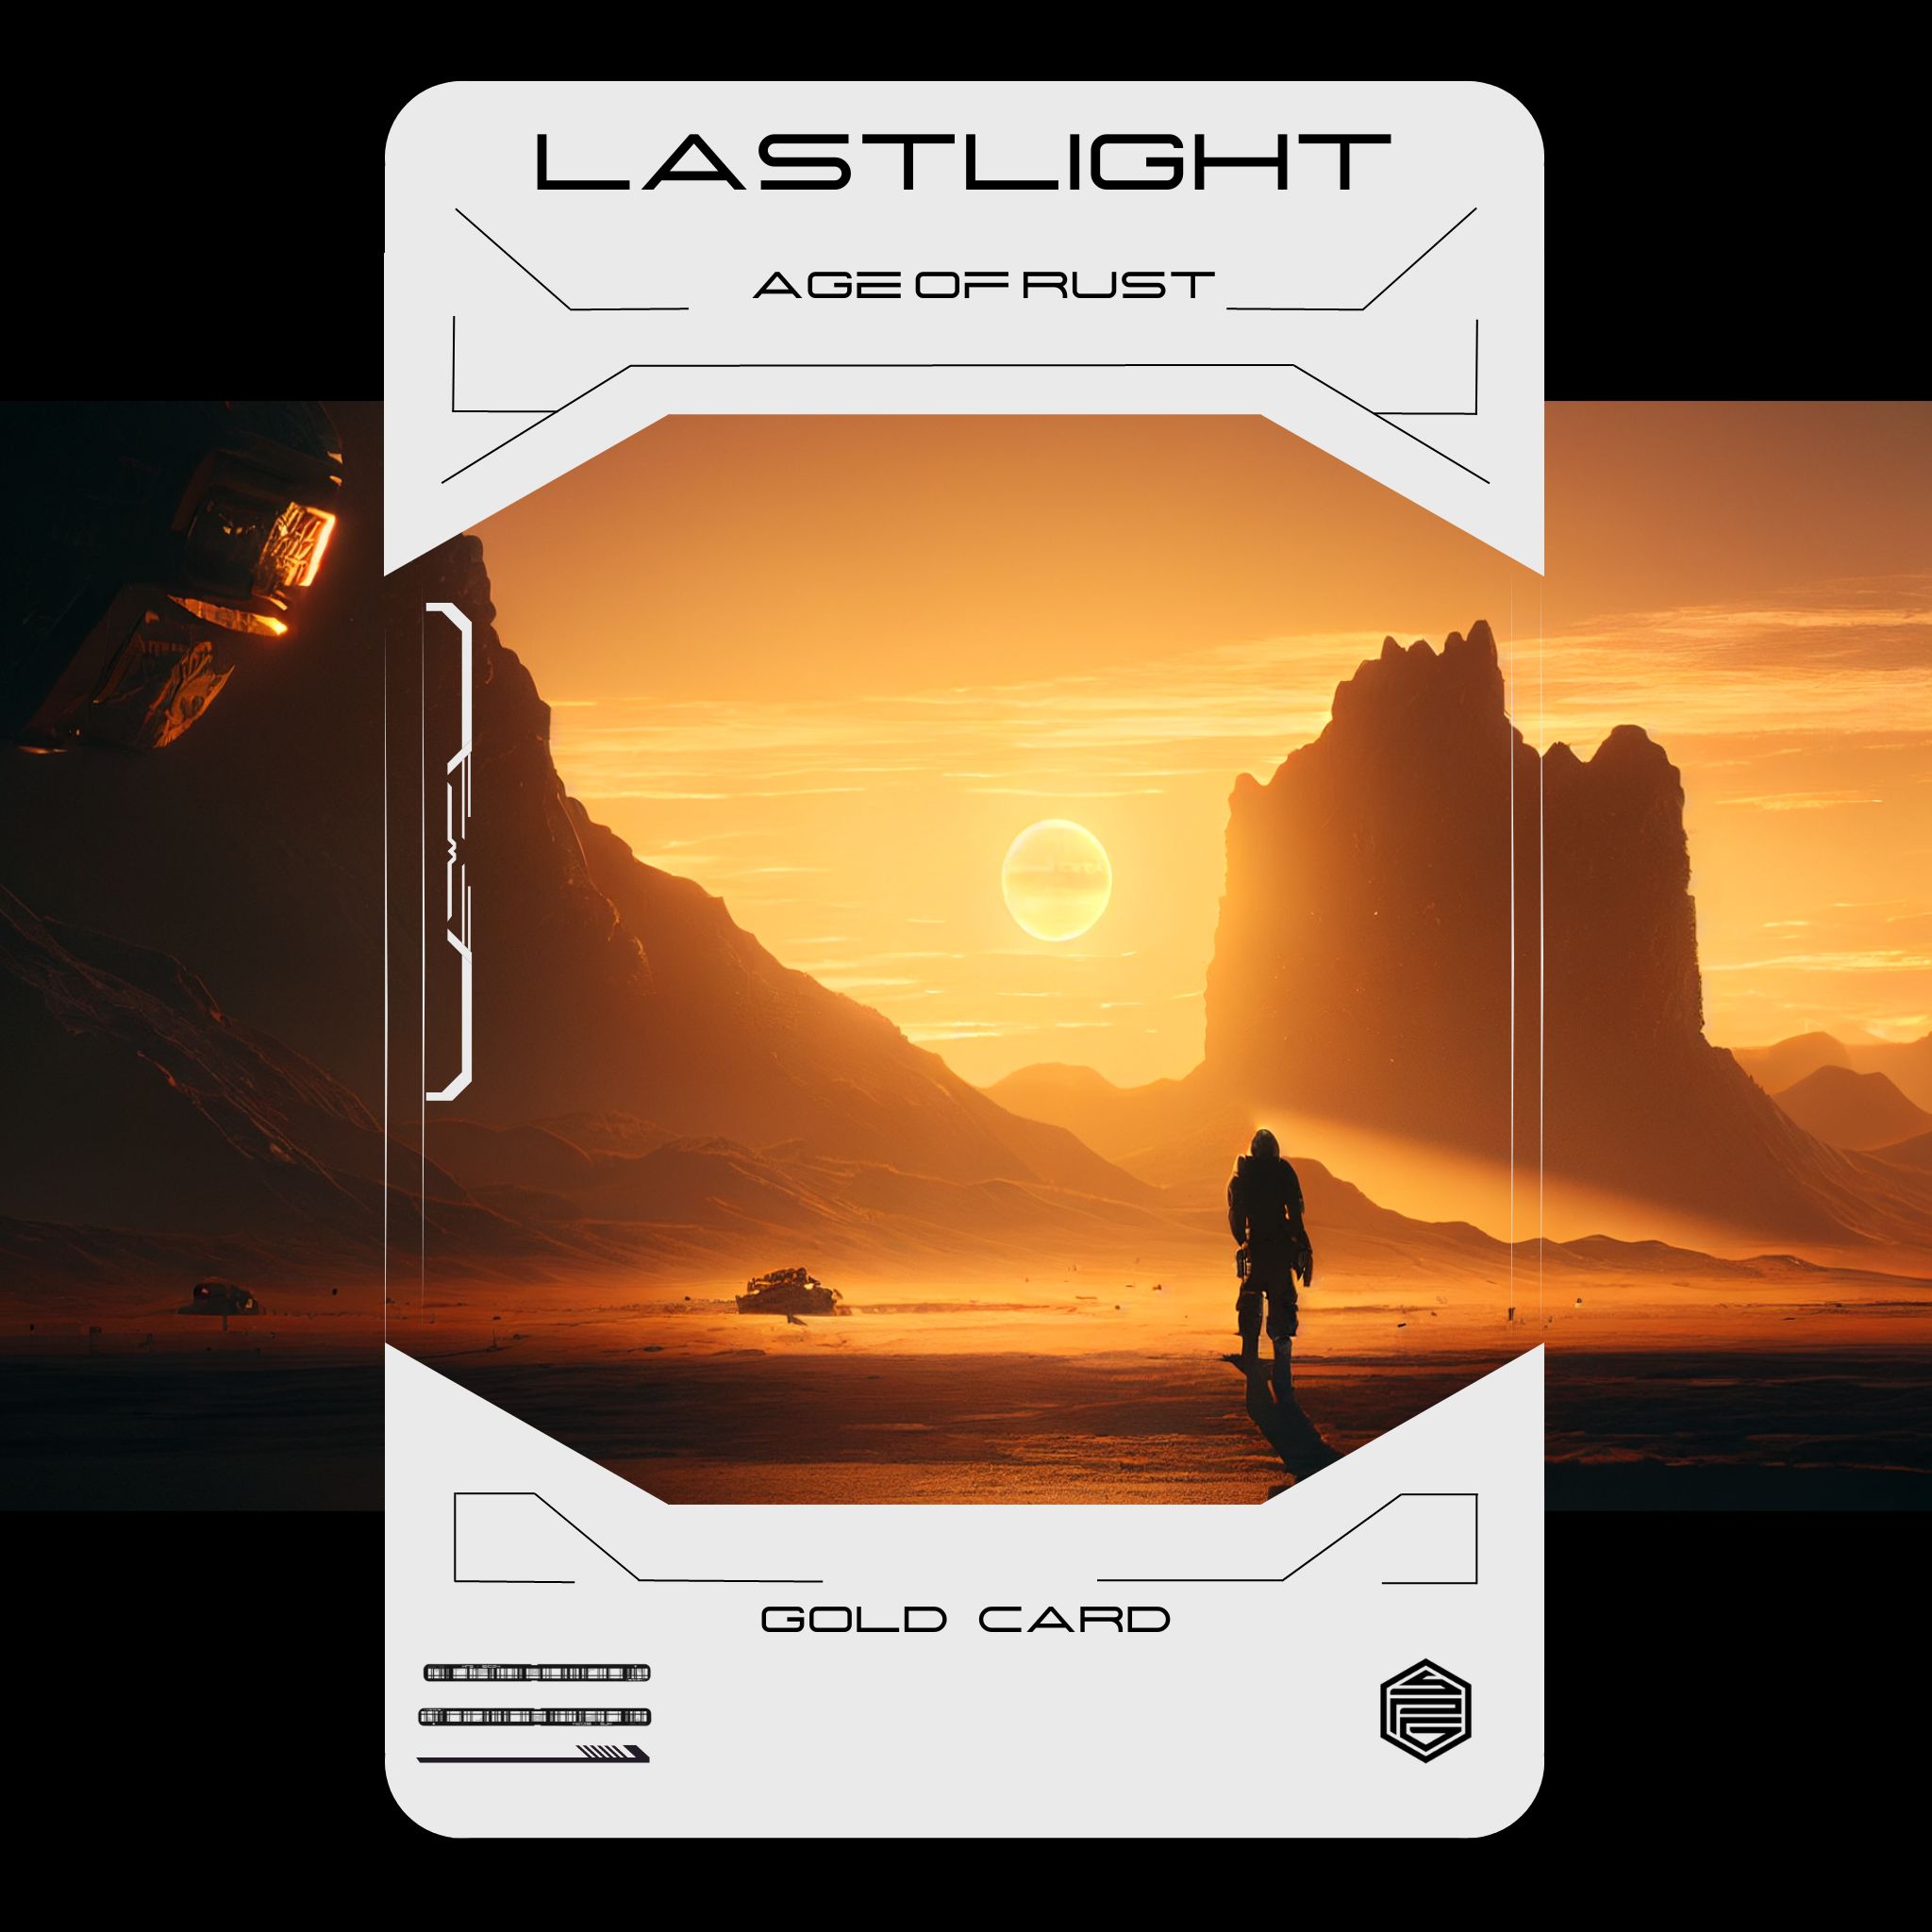 Lastlight